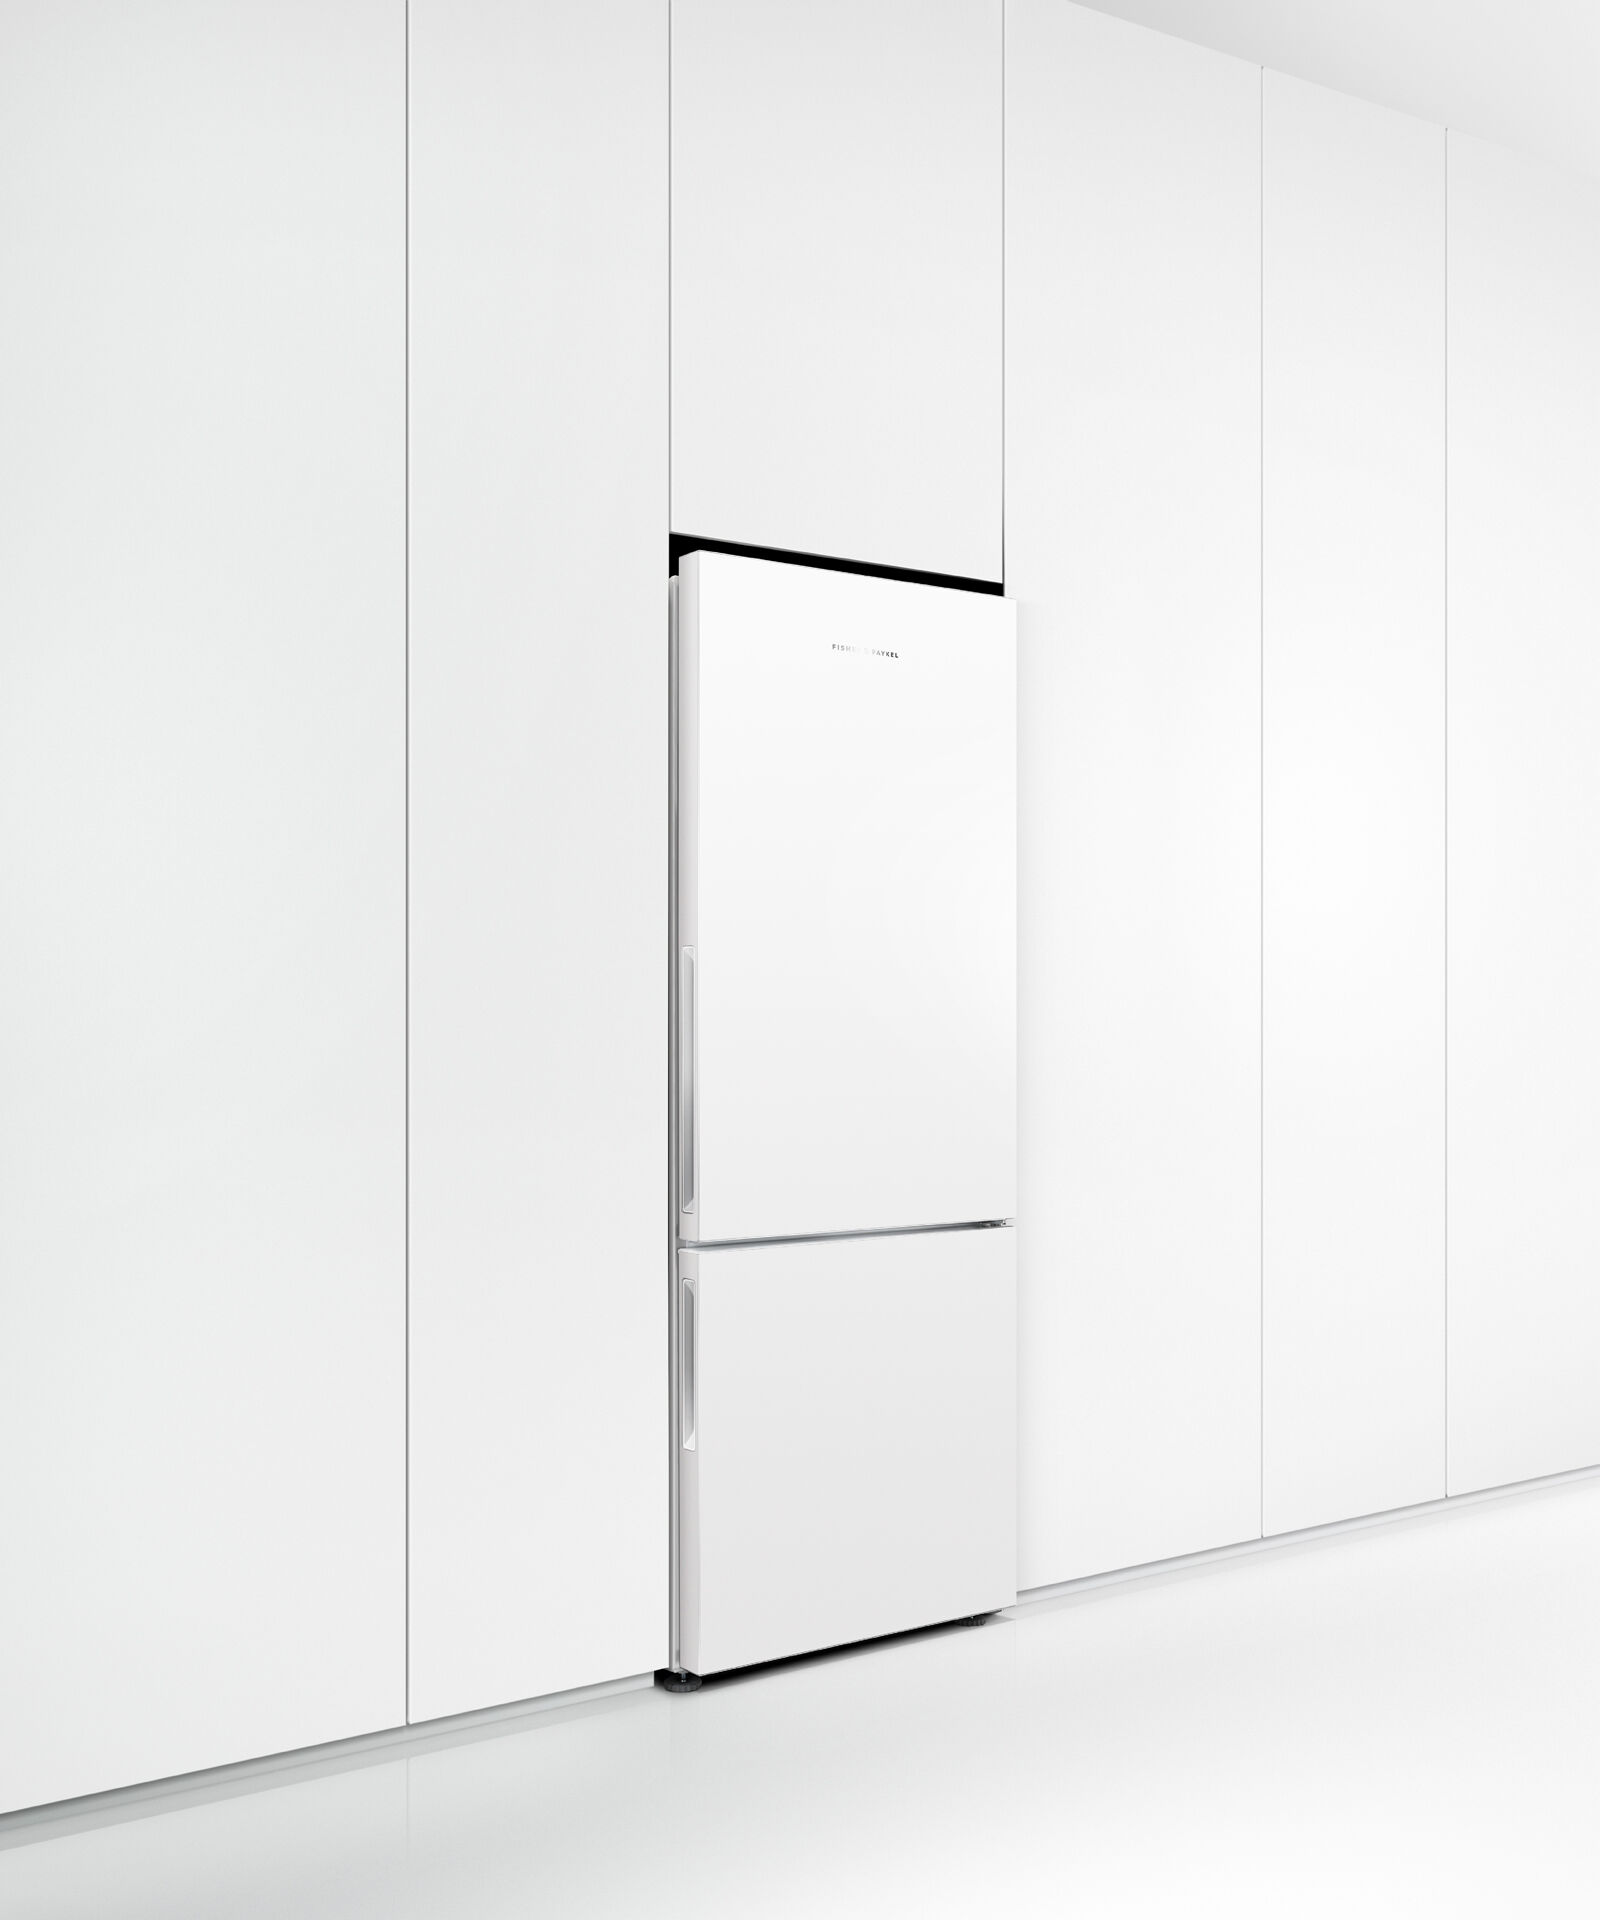 Freestanding Refrigerator Freezer, 63.5cm gallery image 5.0